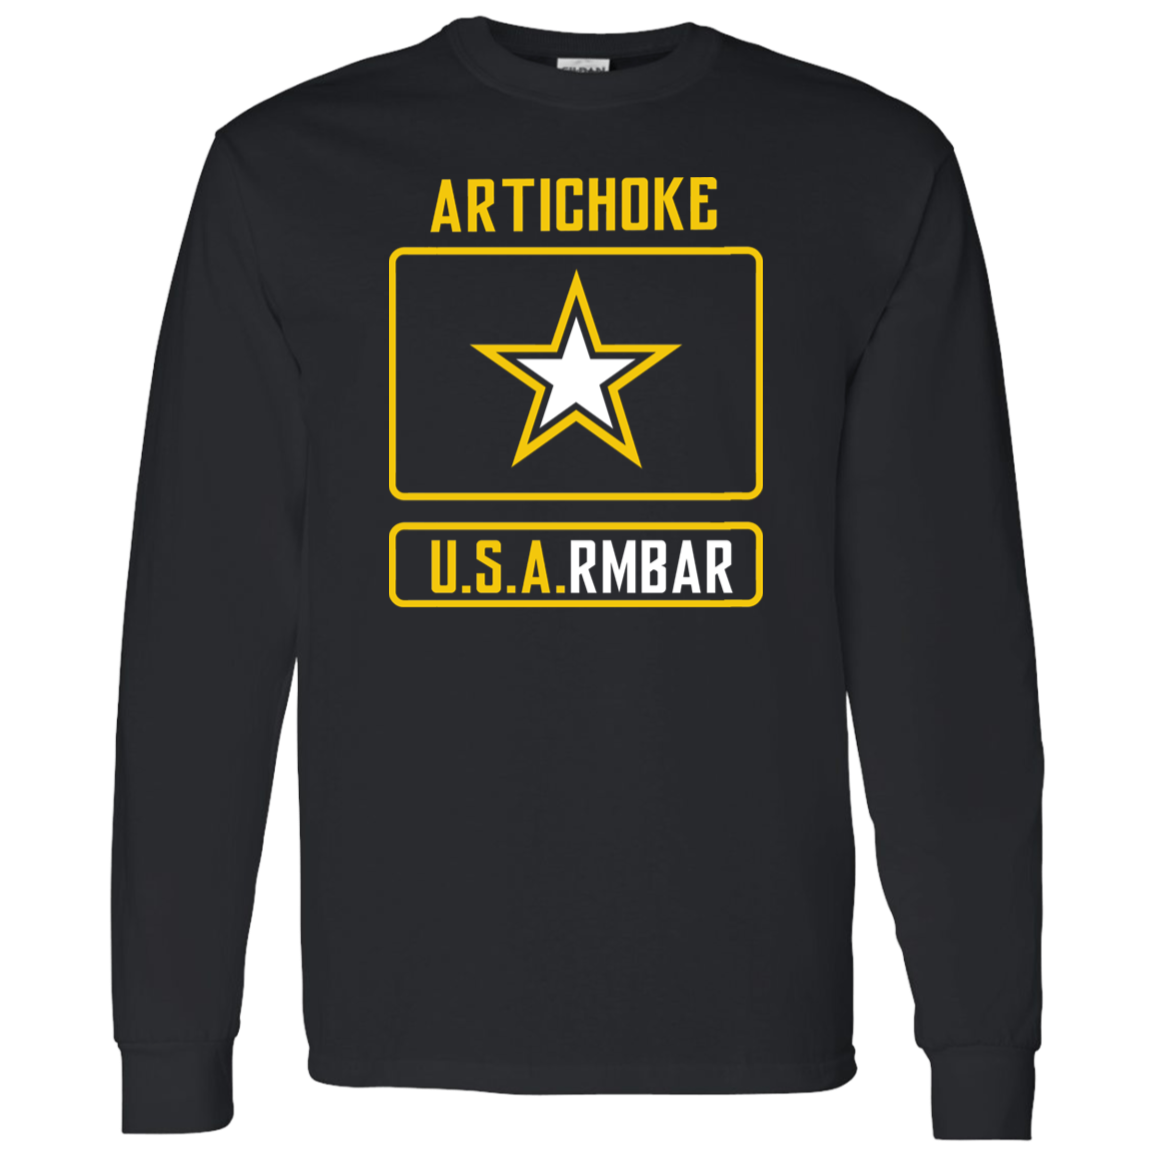 ArtichokeUSA Custom Design #54. Artichoke USArmbar. US Army Parody. 100% Cotton Jersey Knit T-Shirt